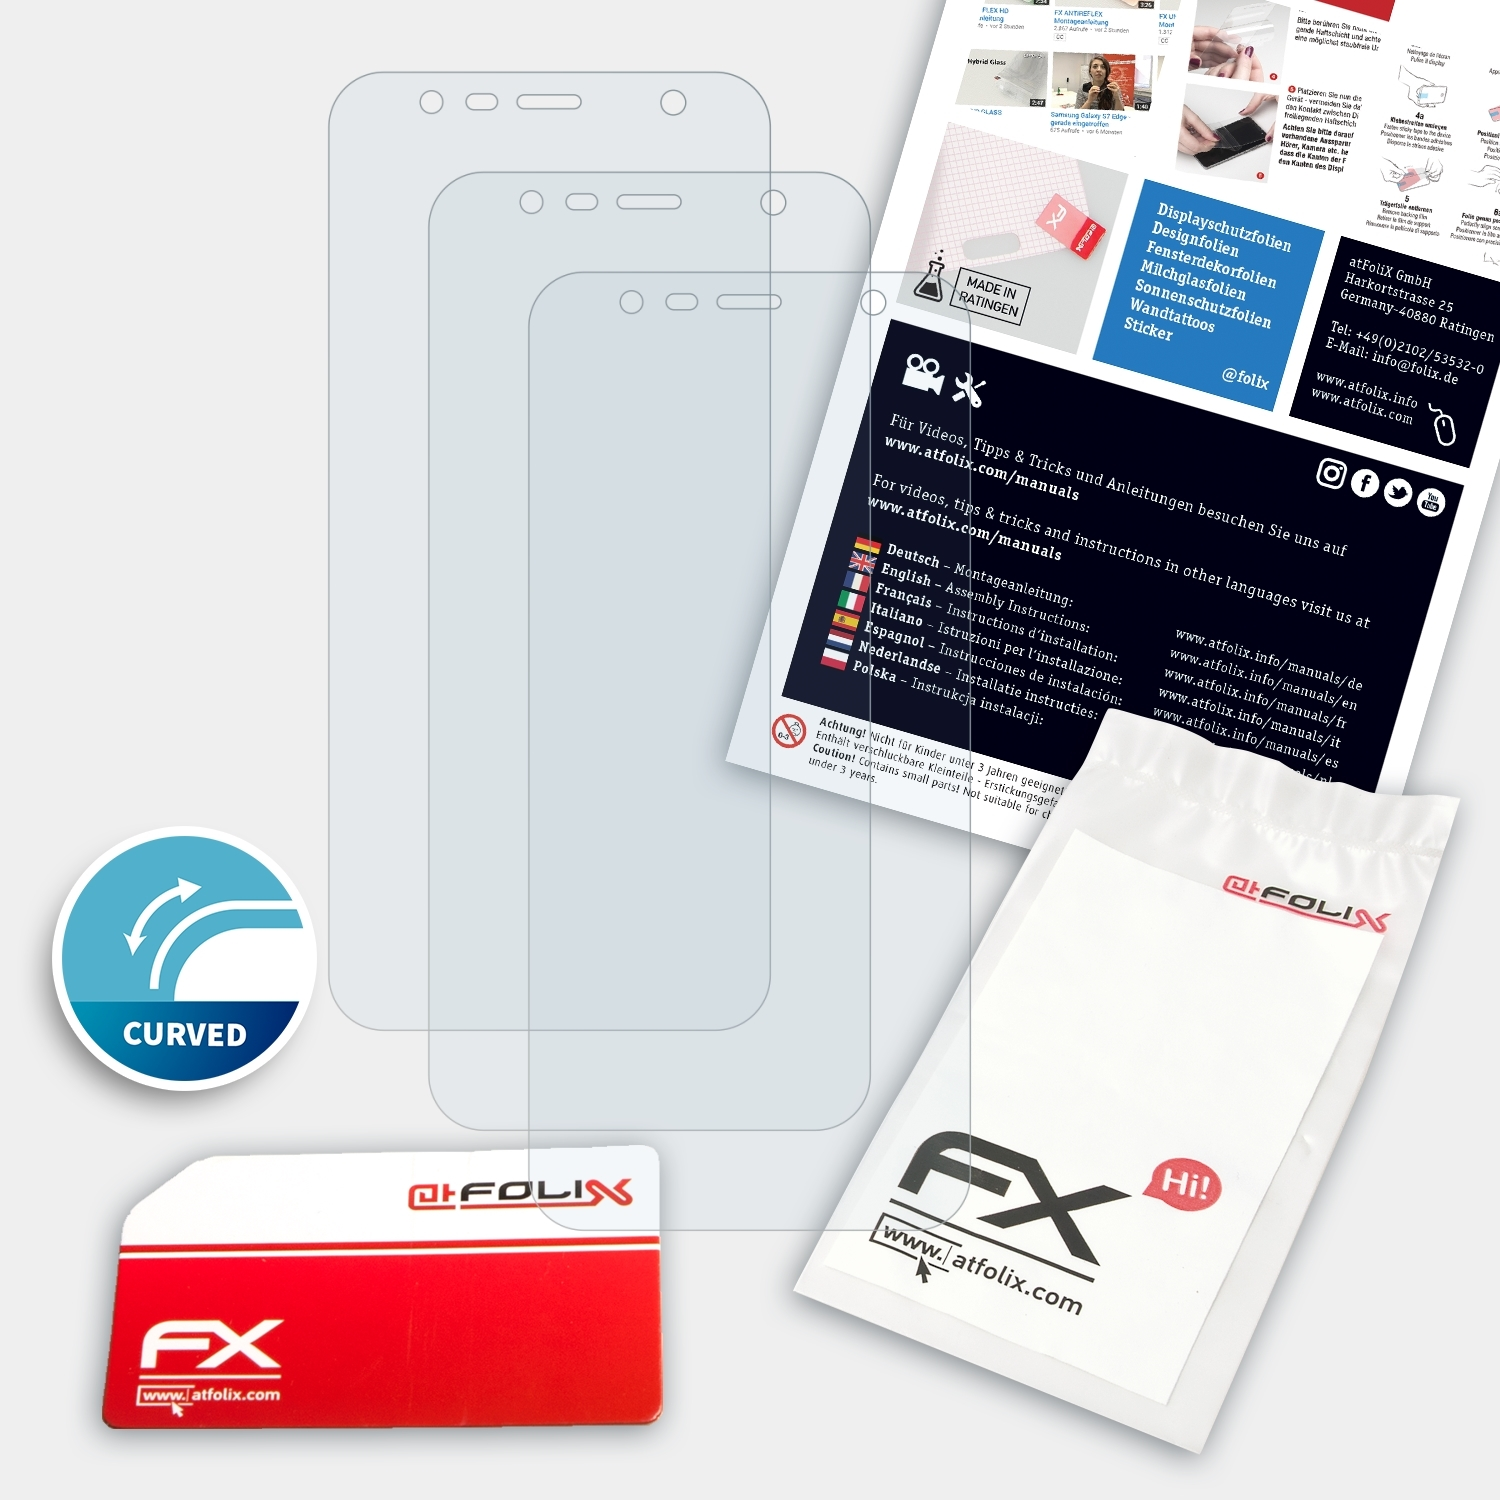 ATFOLIX 3x Core) FX-ActiFleX J4 Galaxy Samsung Displayschutz(für